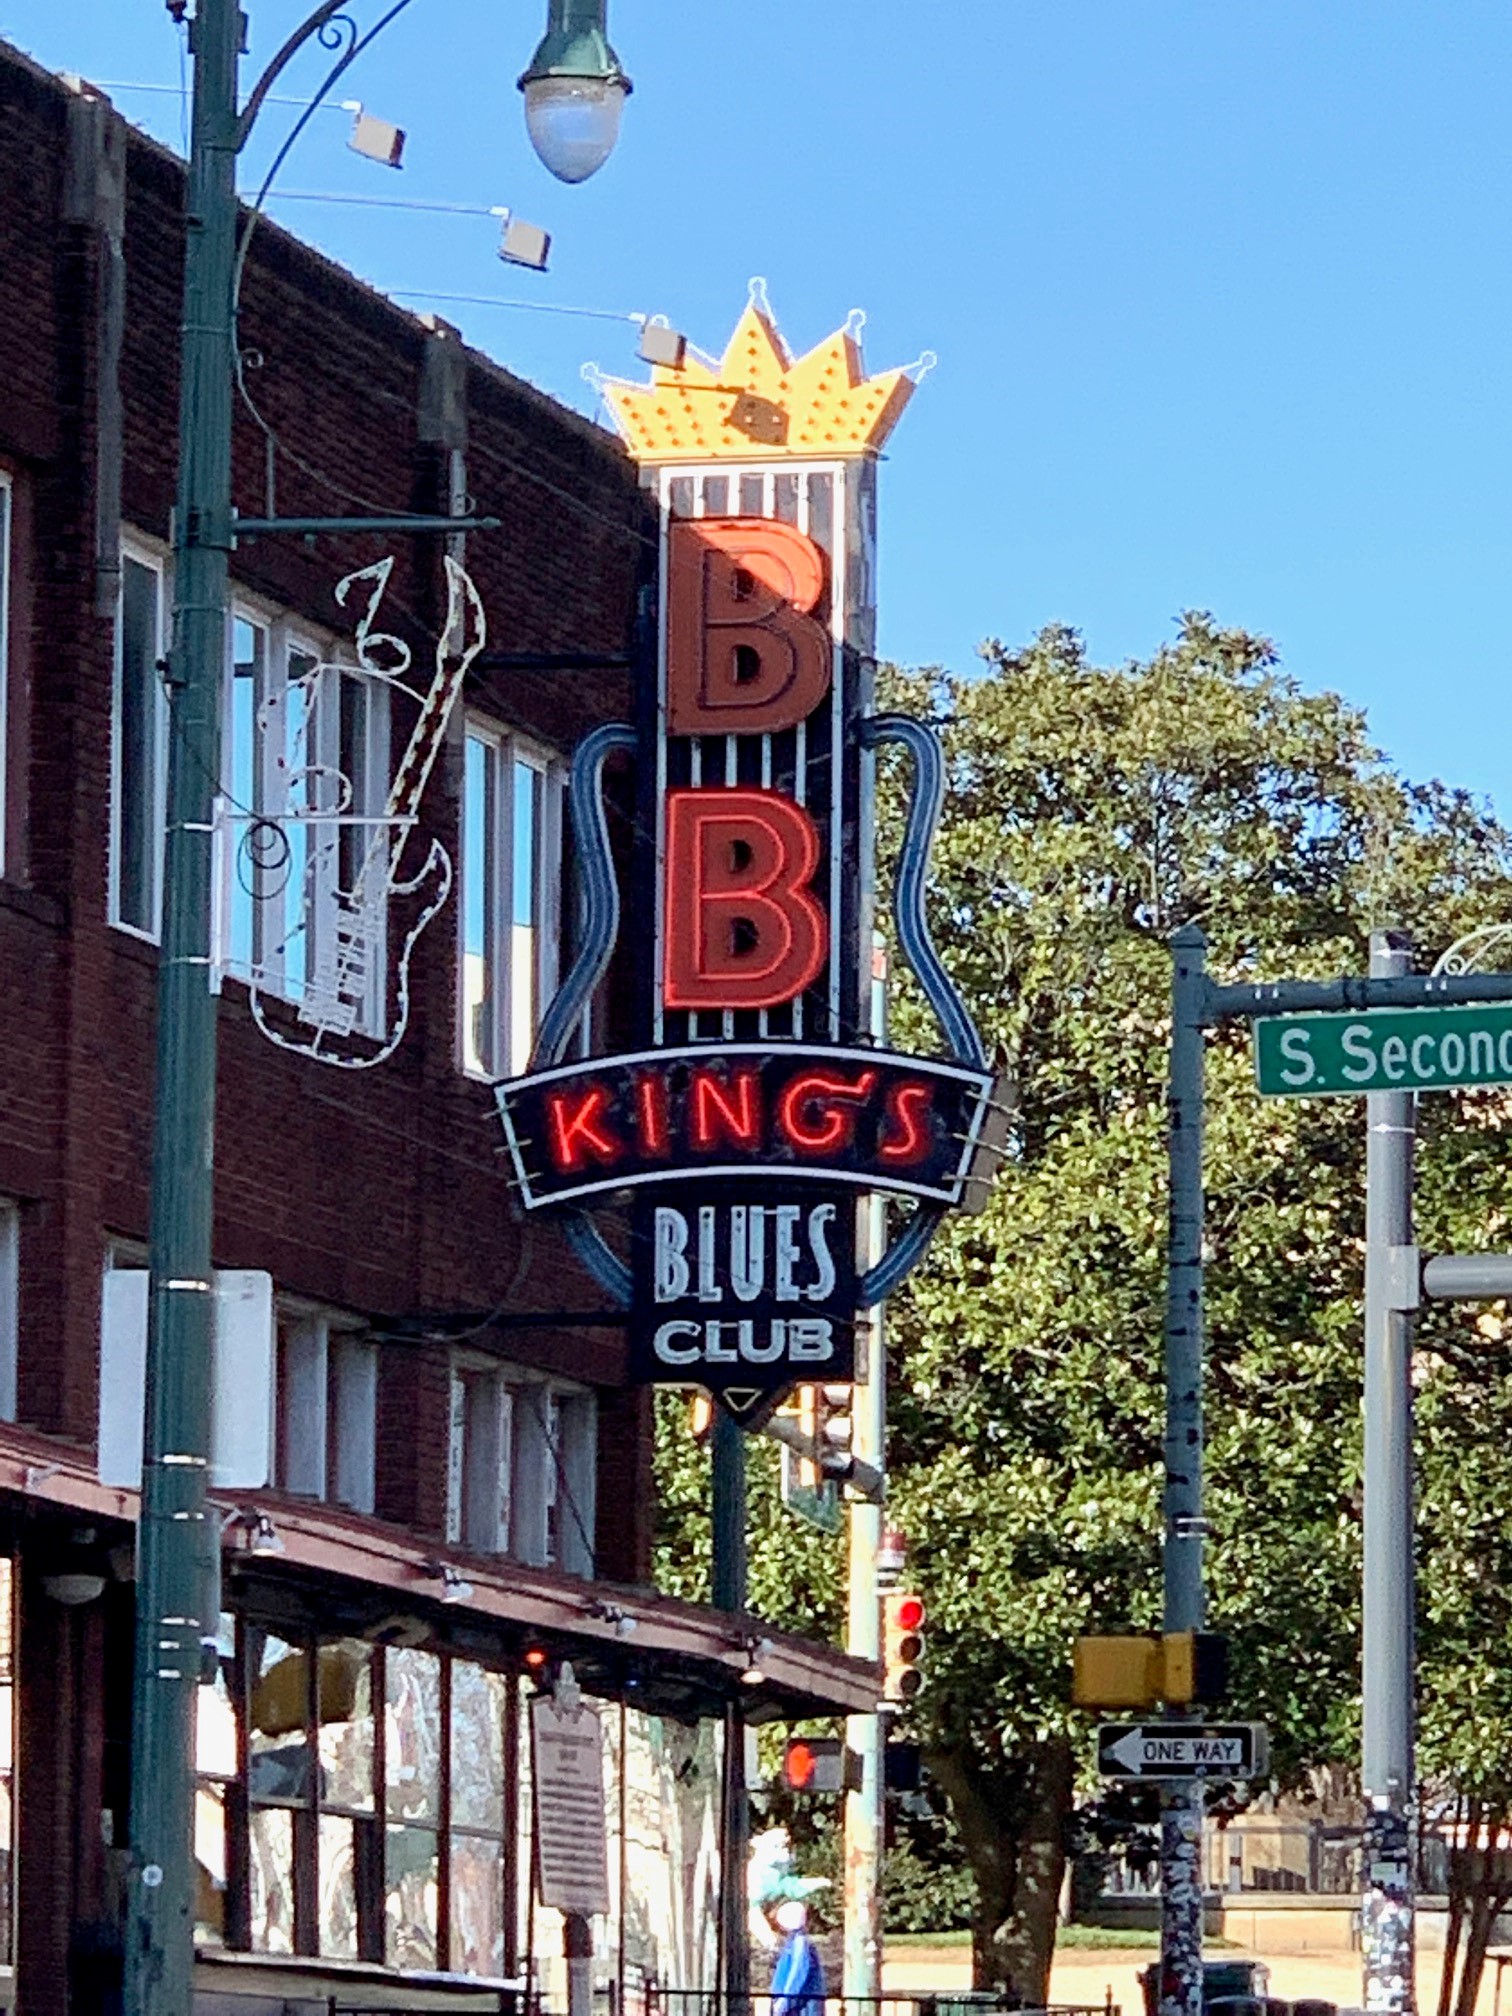 BB King's Blues Club Beale Street Memphis